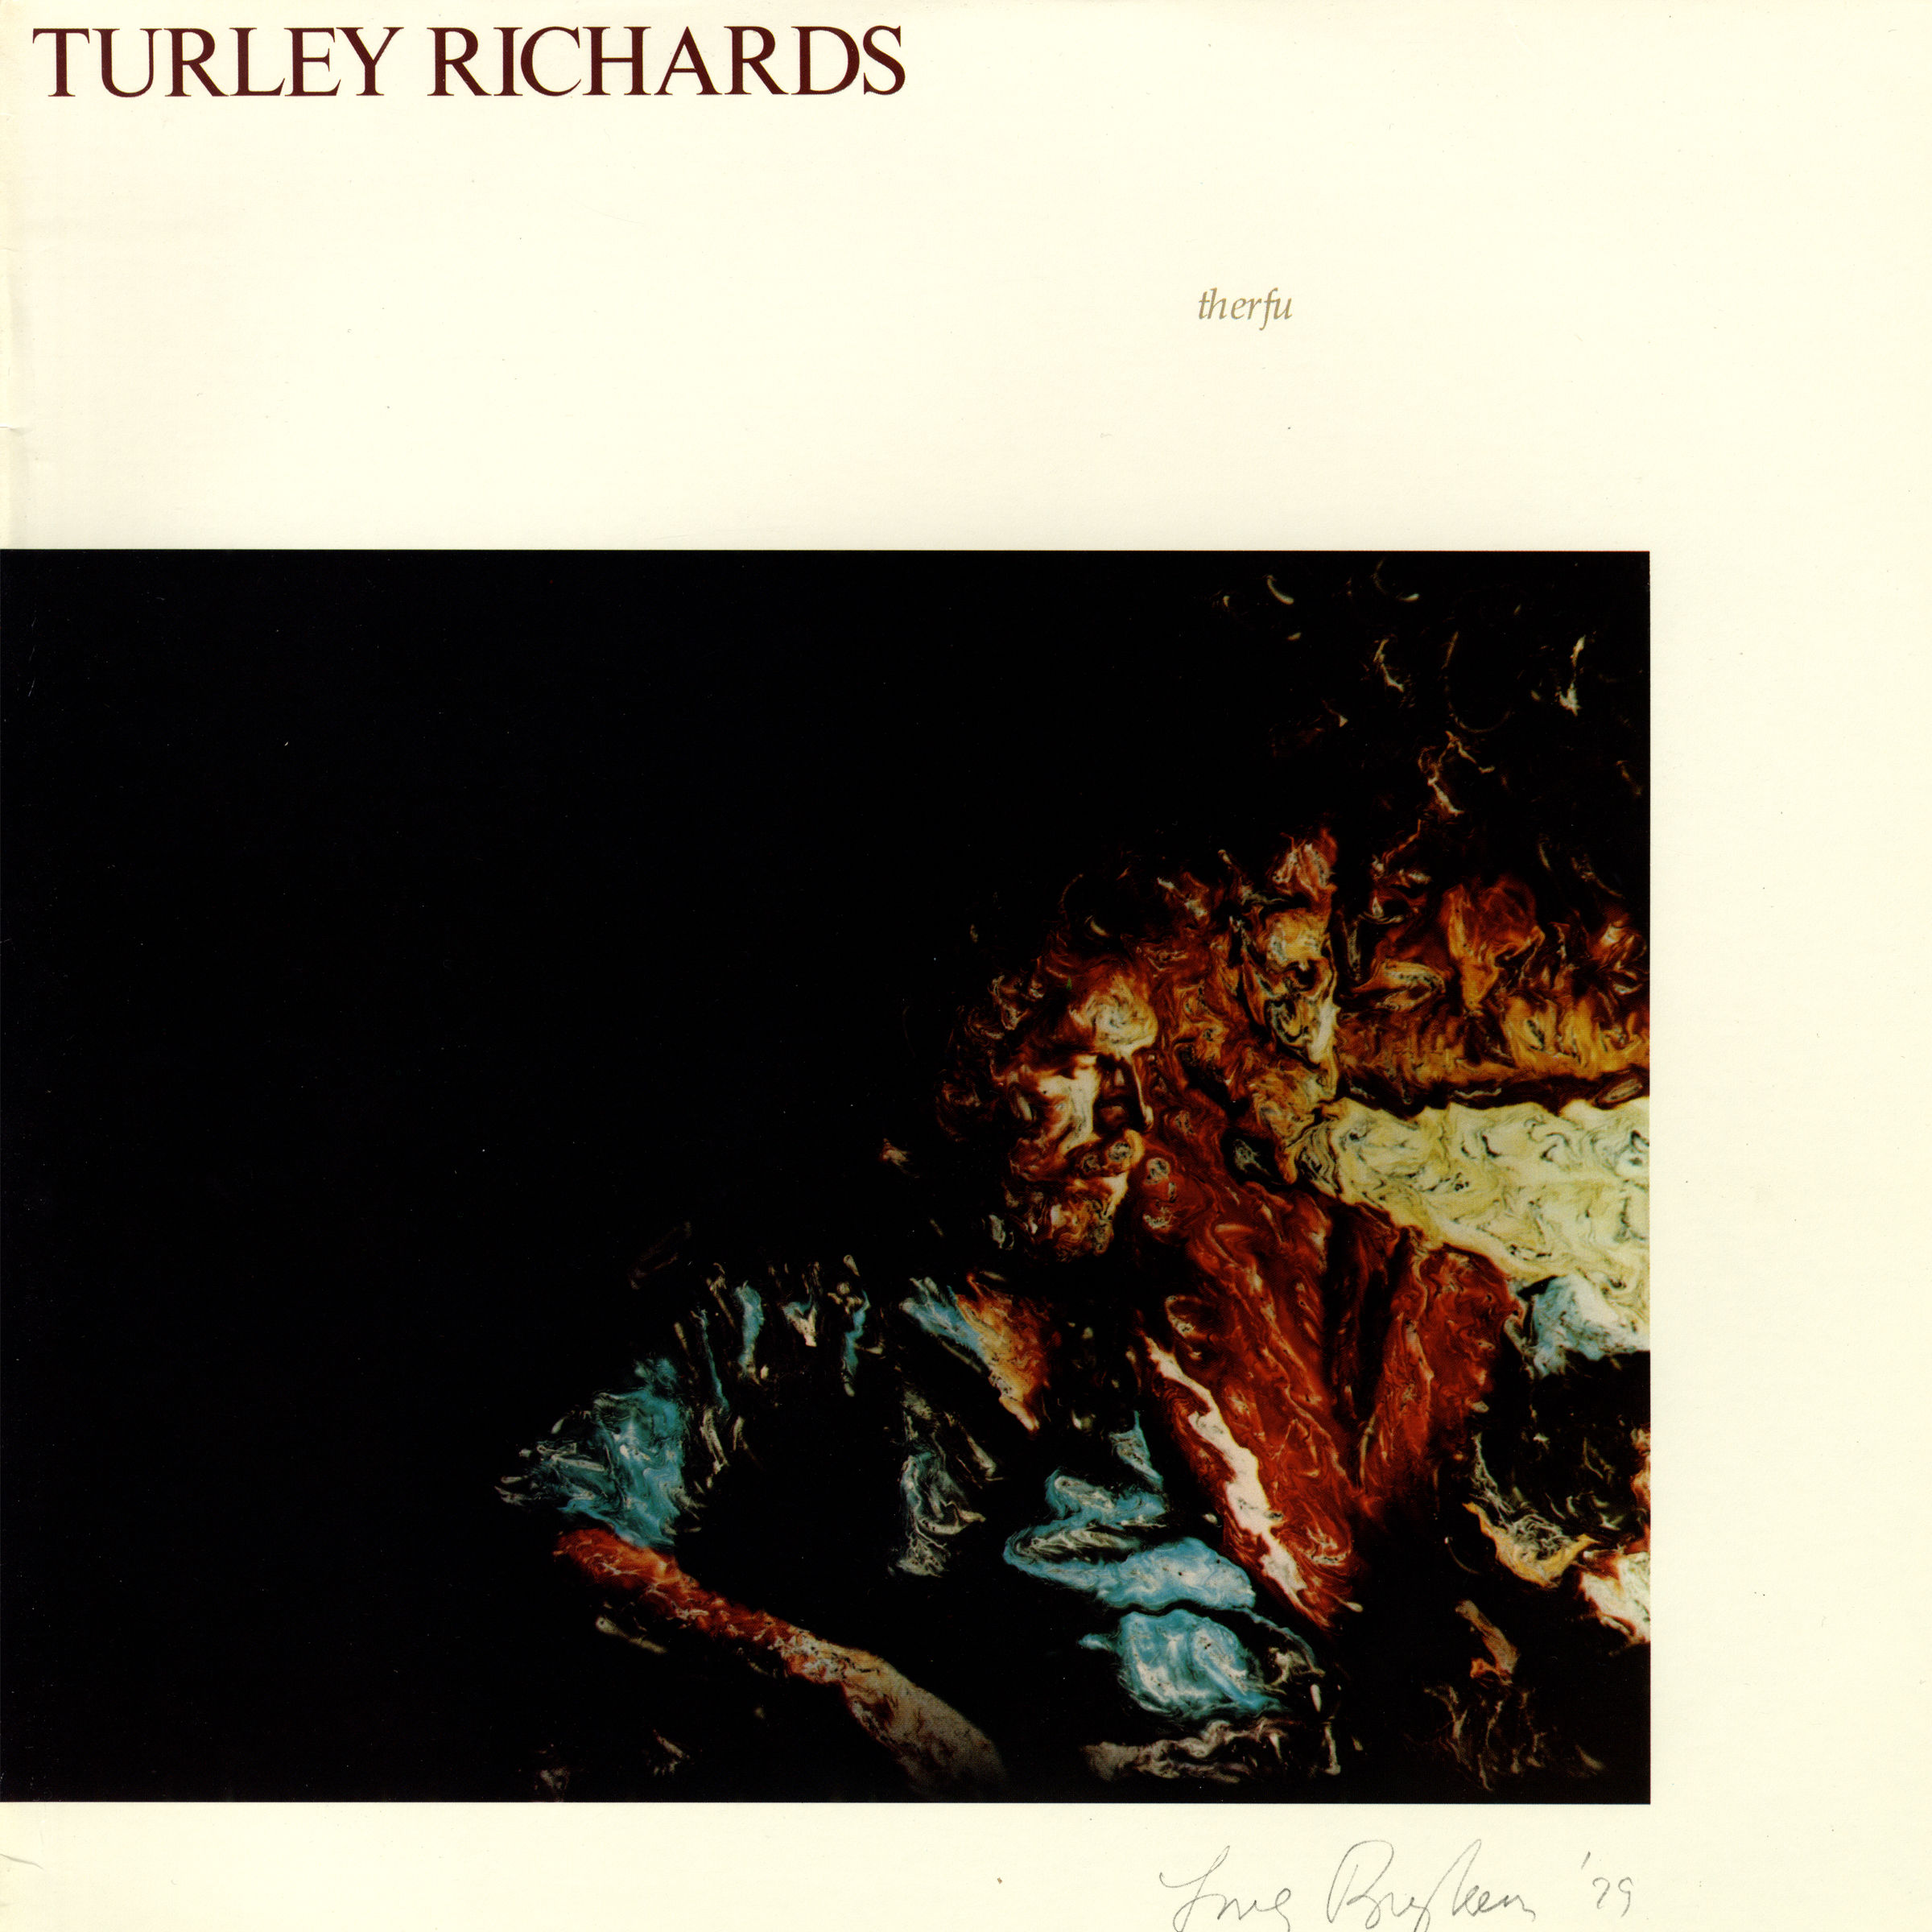 TURLEY RICHARDS – Therfu